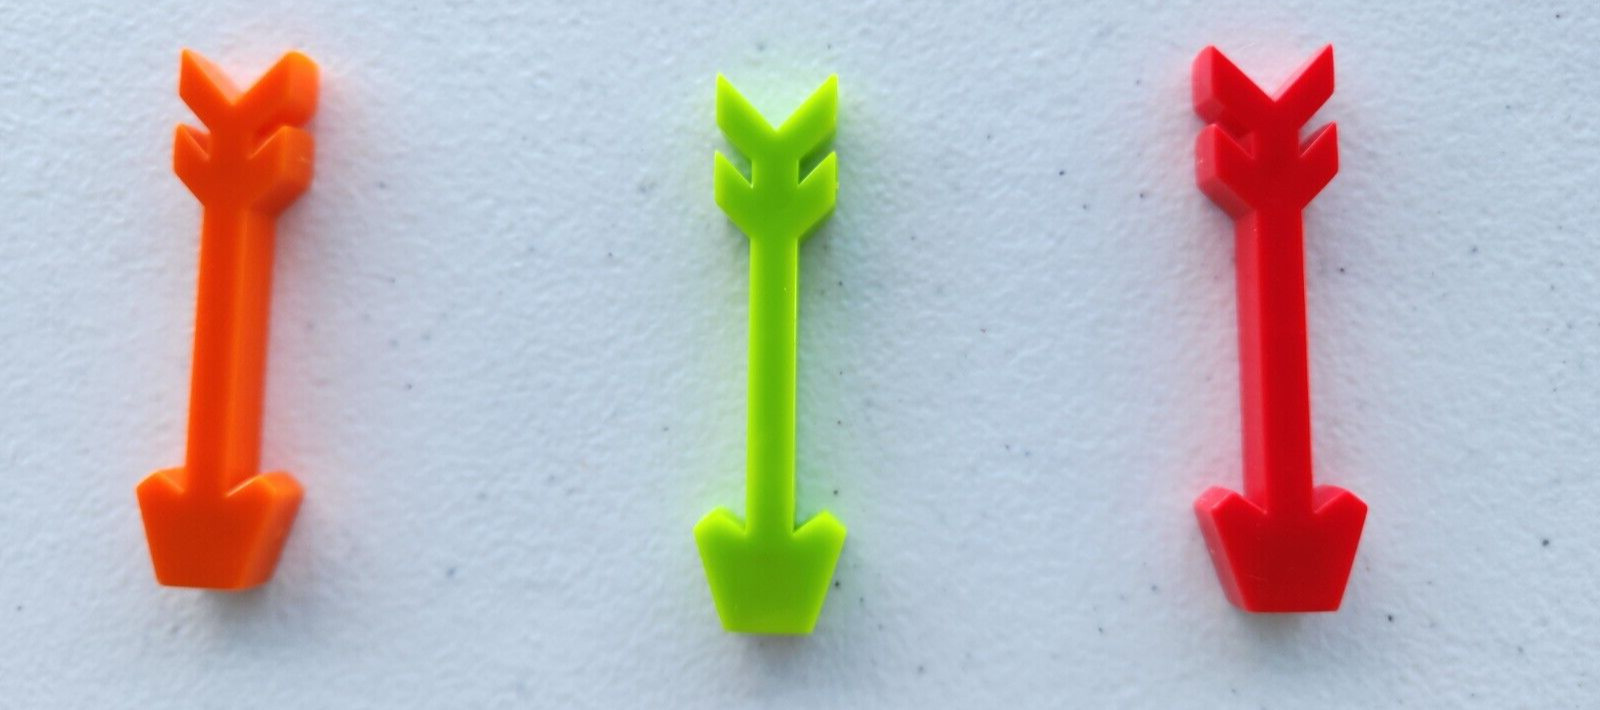 Orange red green arrow shaped shape magnets set